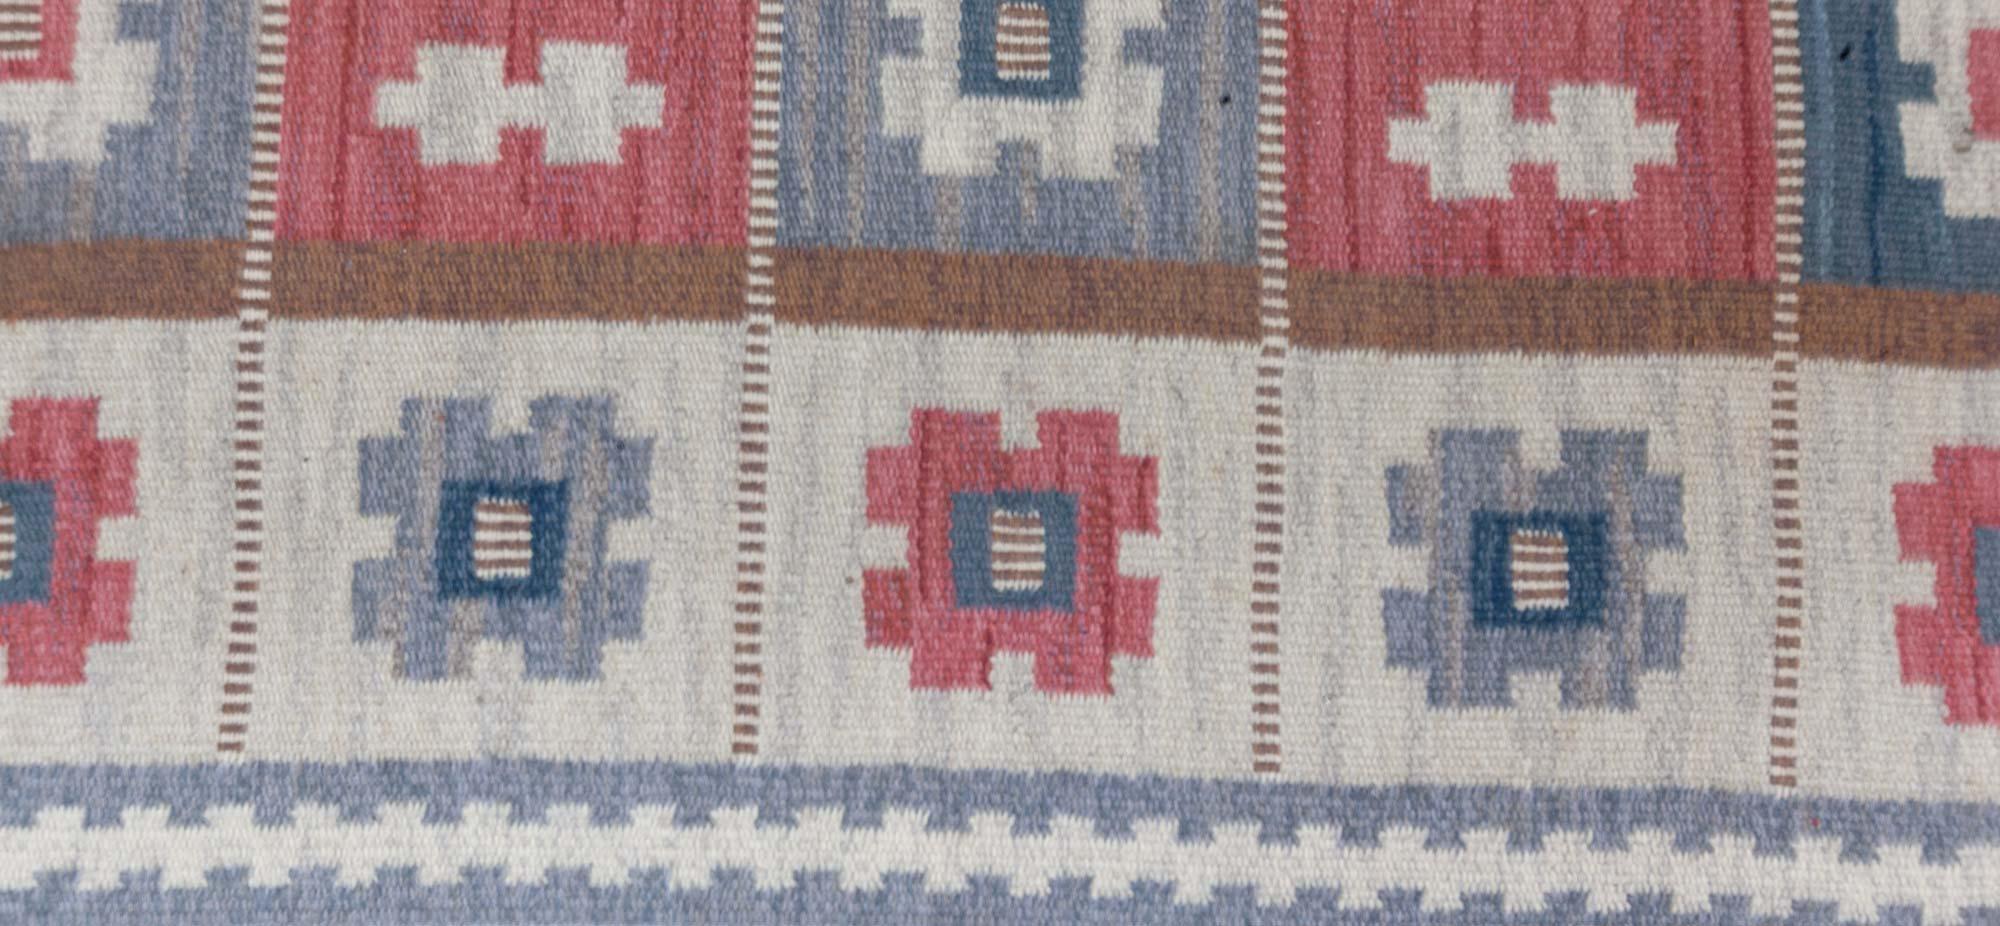 Vintage Swedish flat woven rug by Anna Greta Sjokvist at Doris Leslie Blau
Size: 5'10